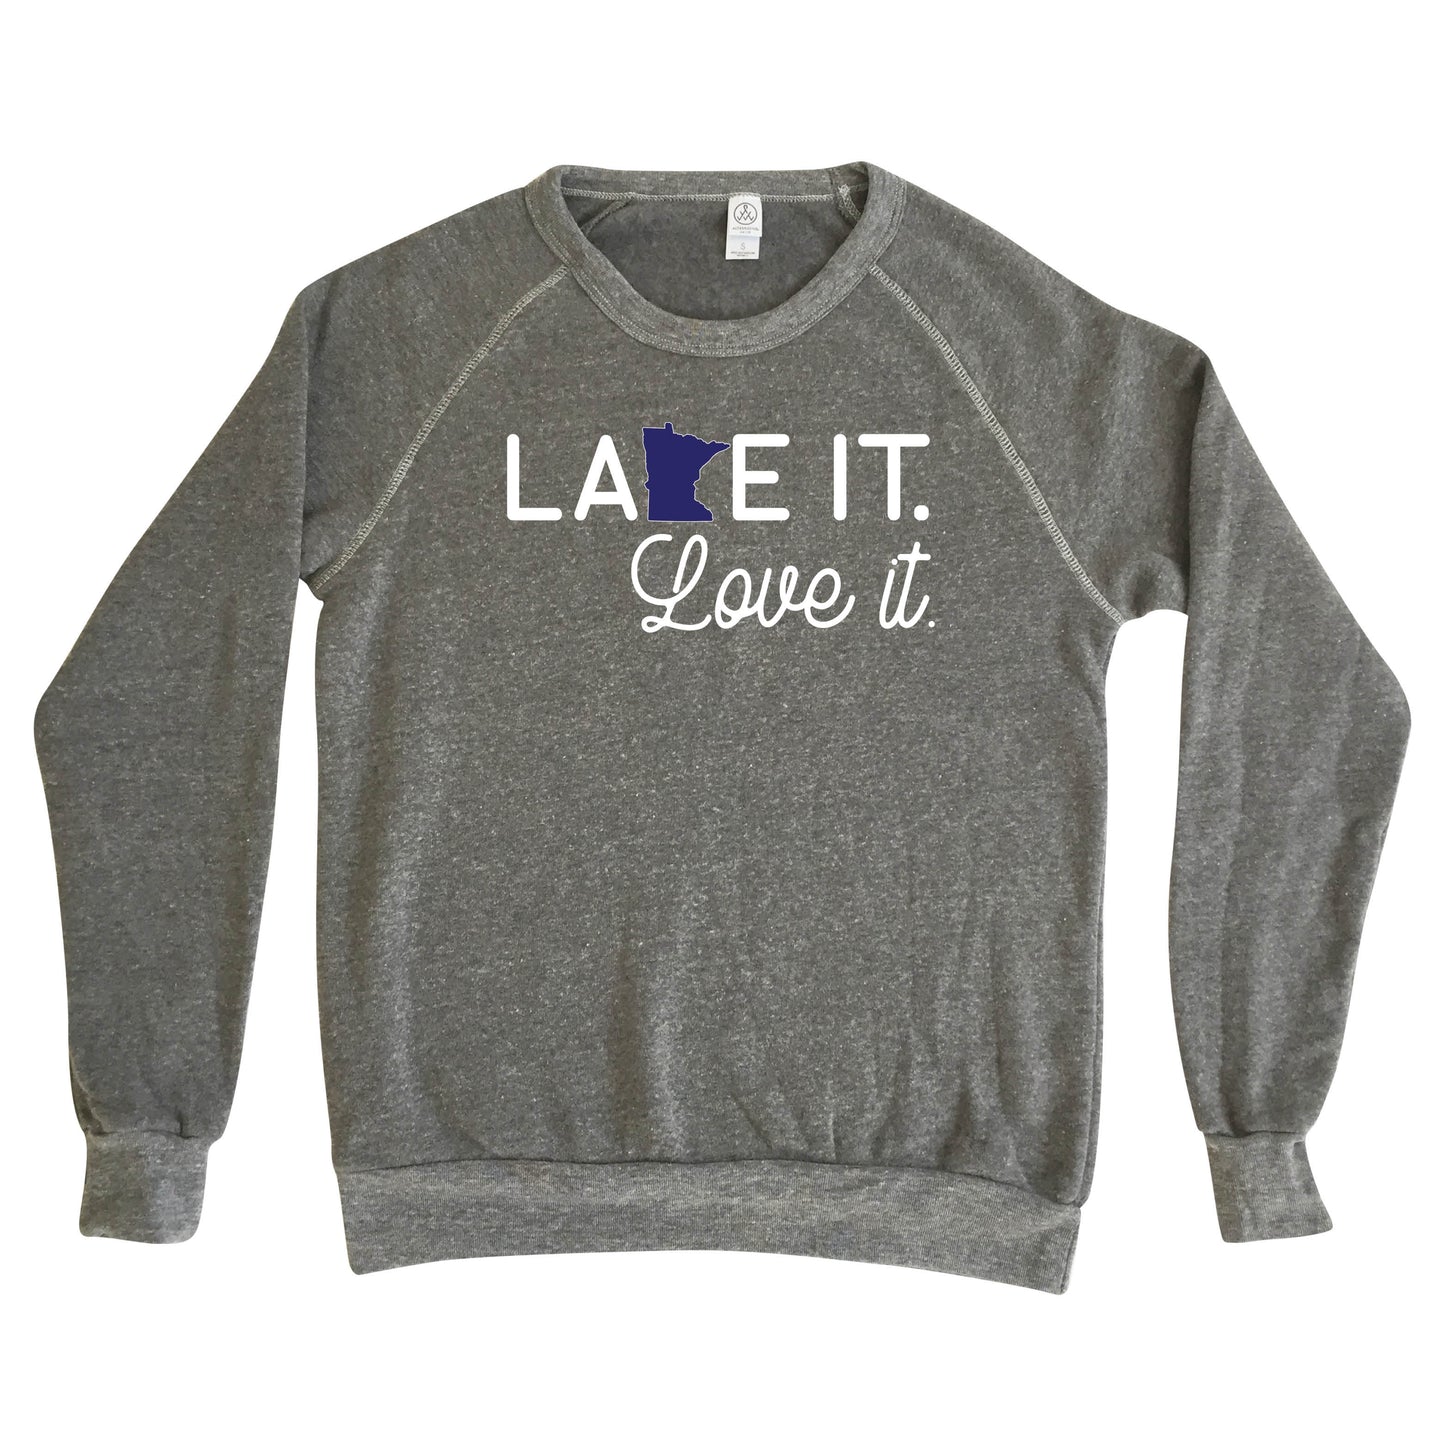 Minnesota Lake it Love it - Fleece Sweatshirt